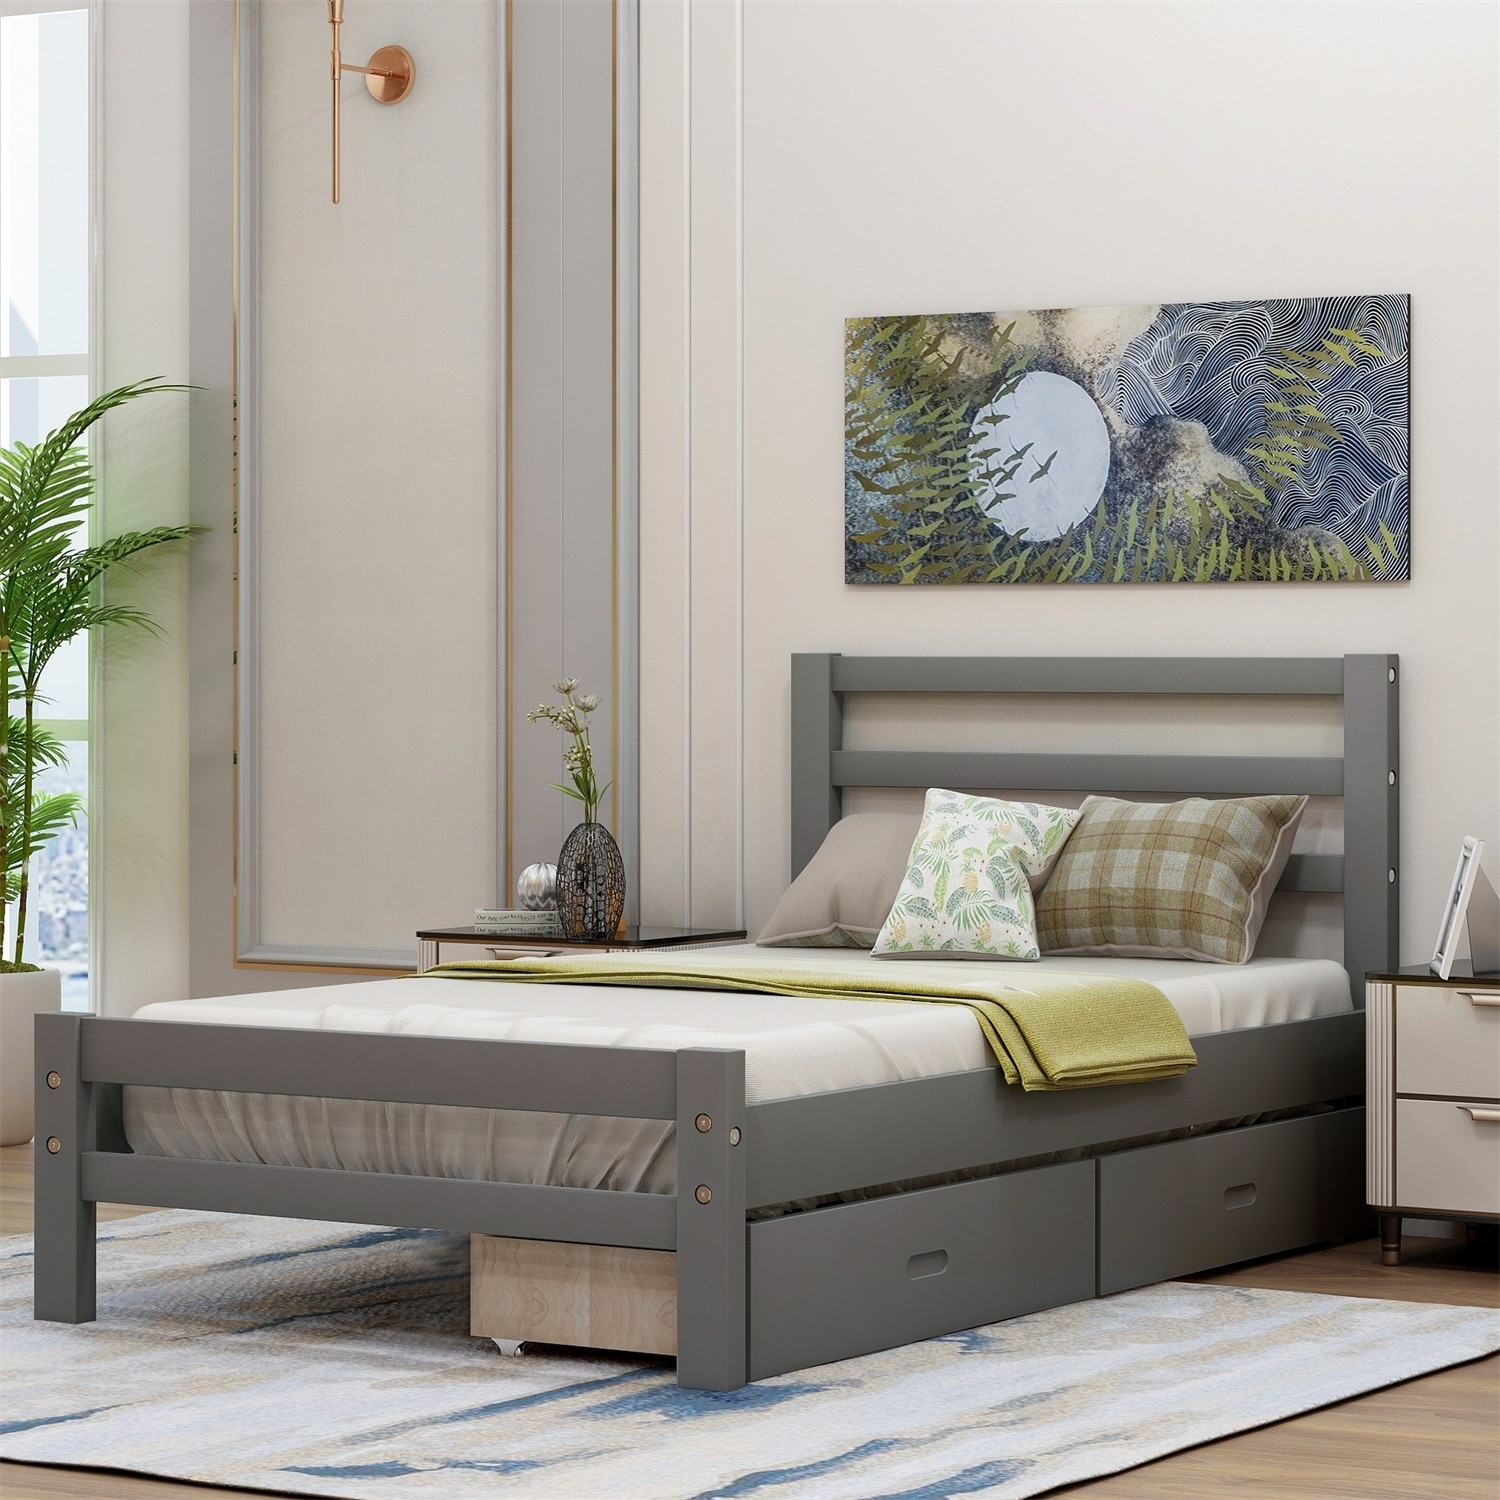 Harper & Bright Designs Gray Wooden Frame Queen Size Murphy Bed